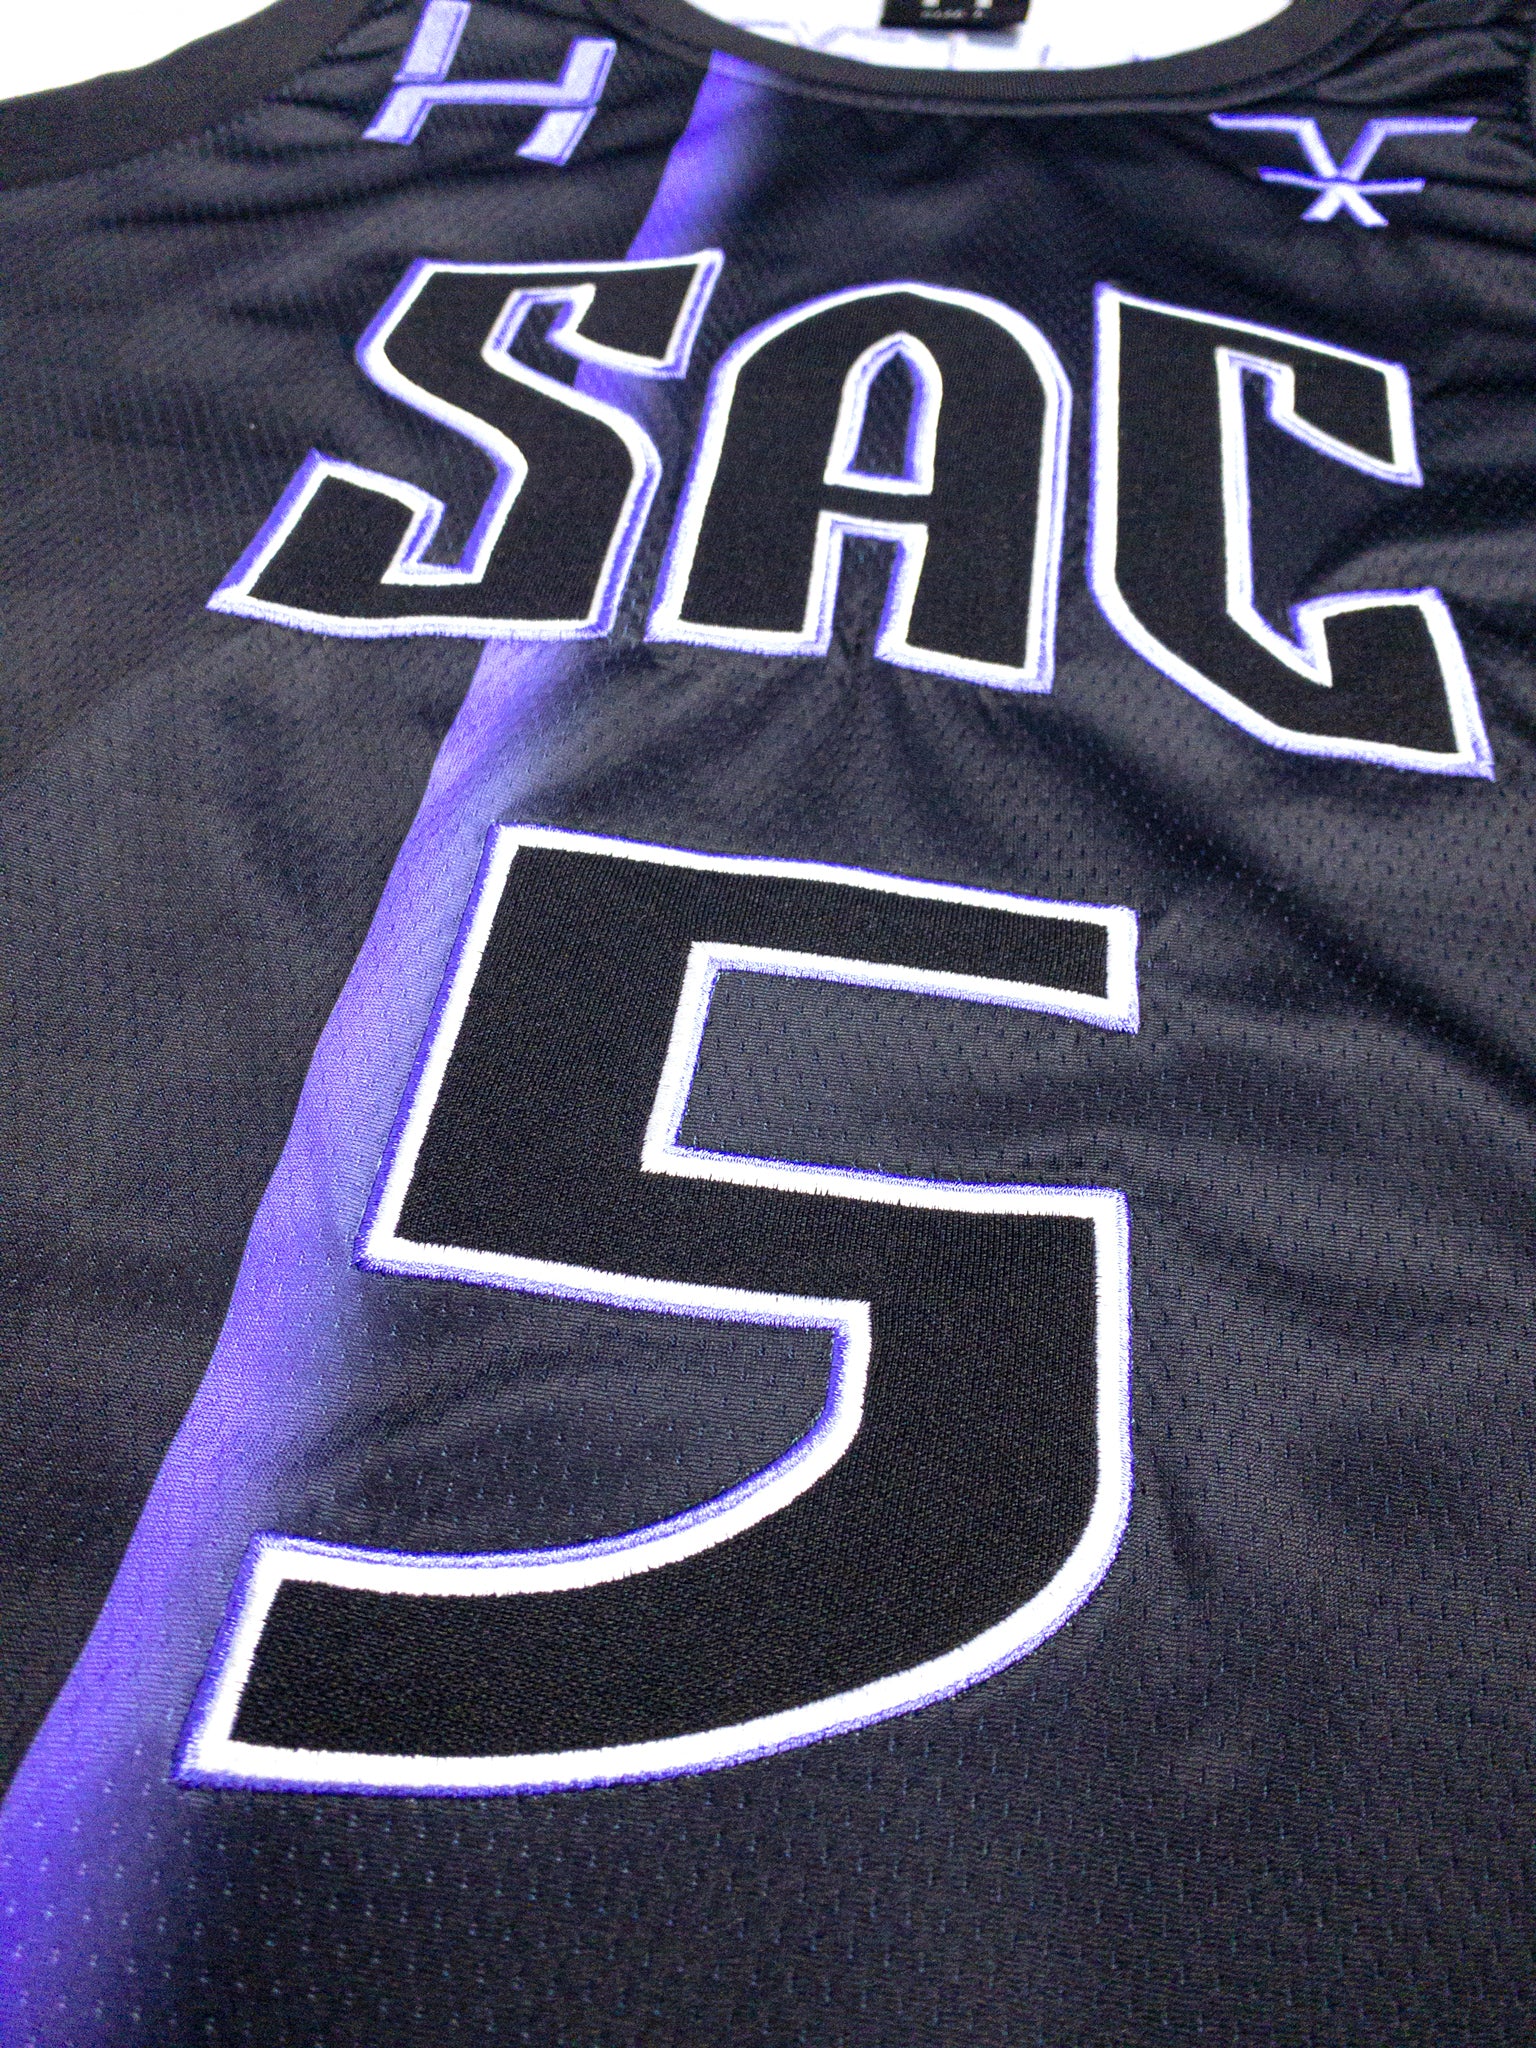 NBA Digital File Basketball Jersey Design Purple Full -  Israel